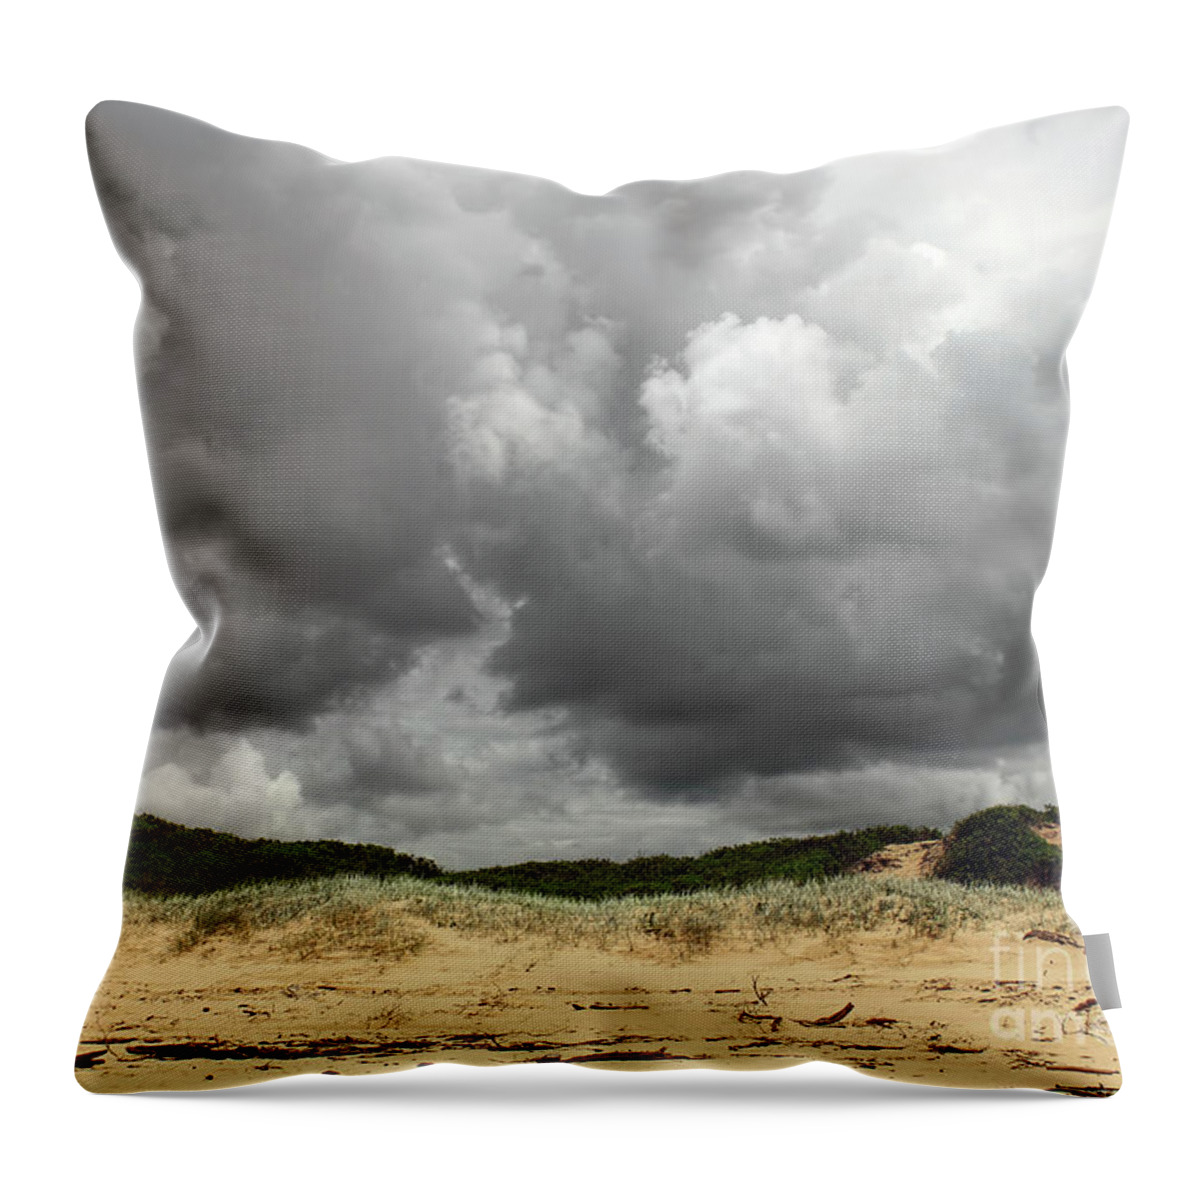 Cloudy Beach Throw Pillow featuring the photograph Cloudy Beach II by Kaye Menner by Kaye Menner